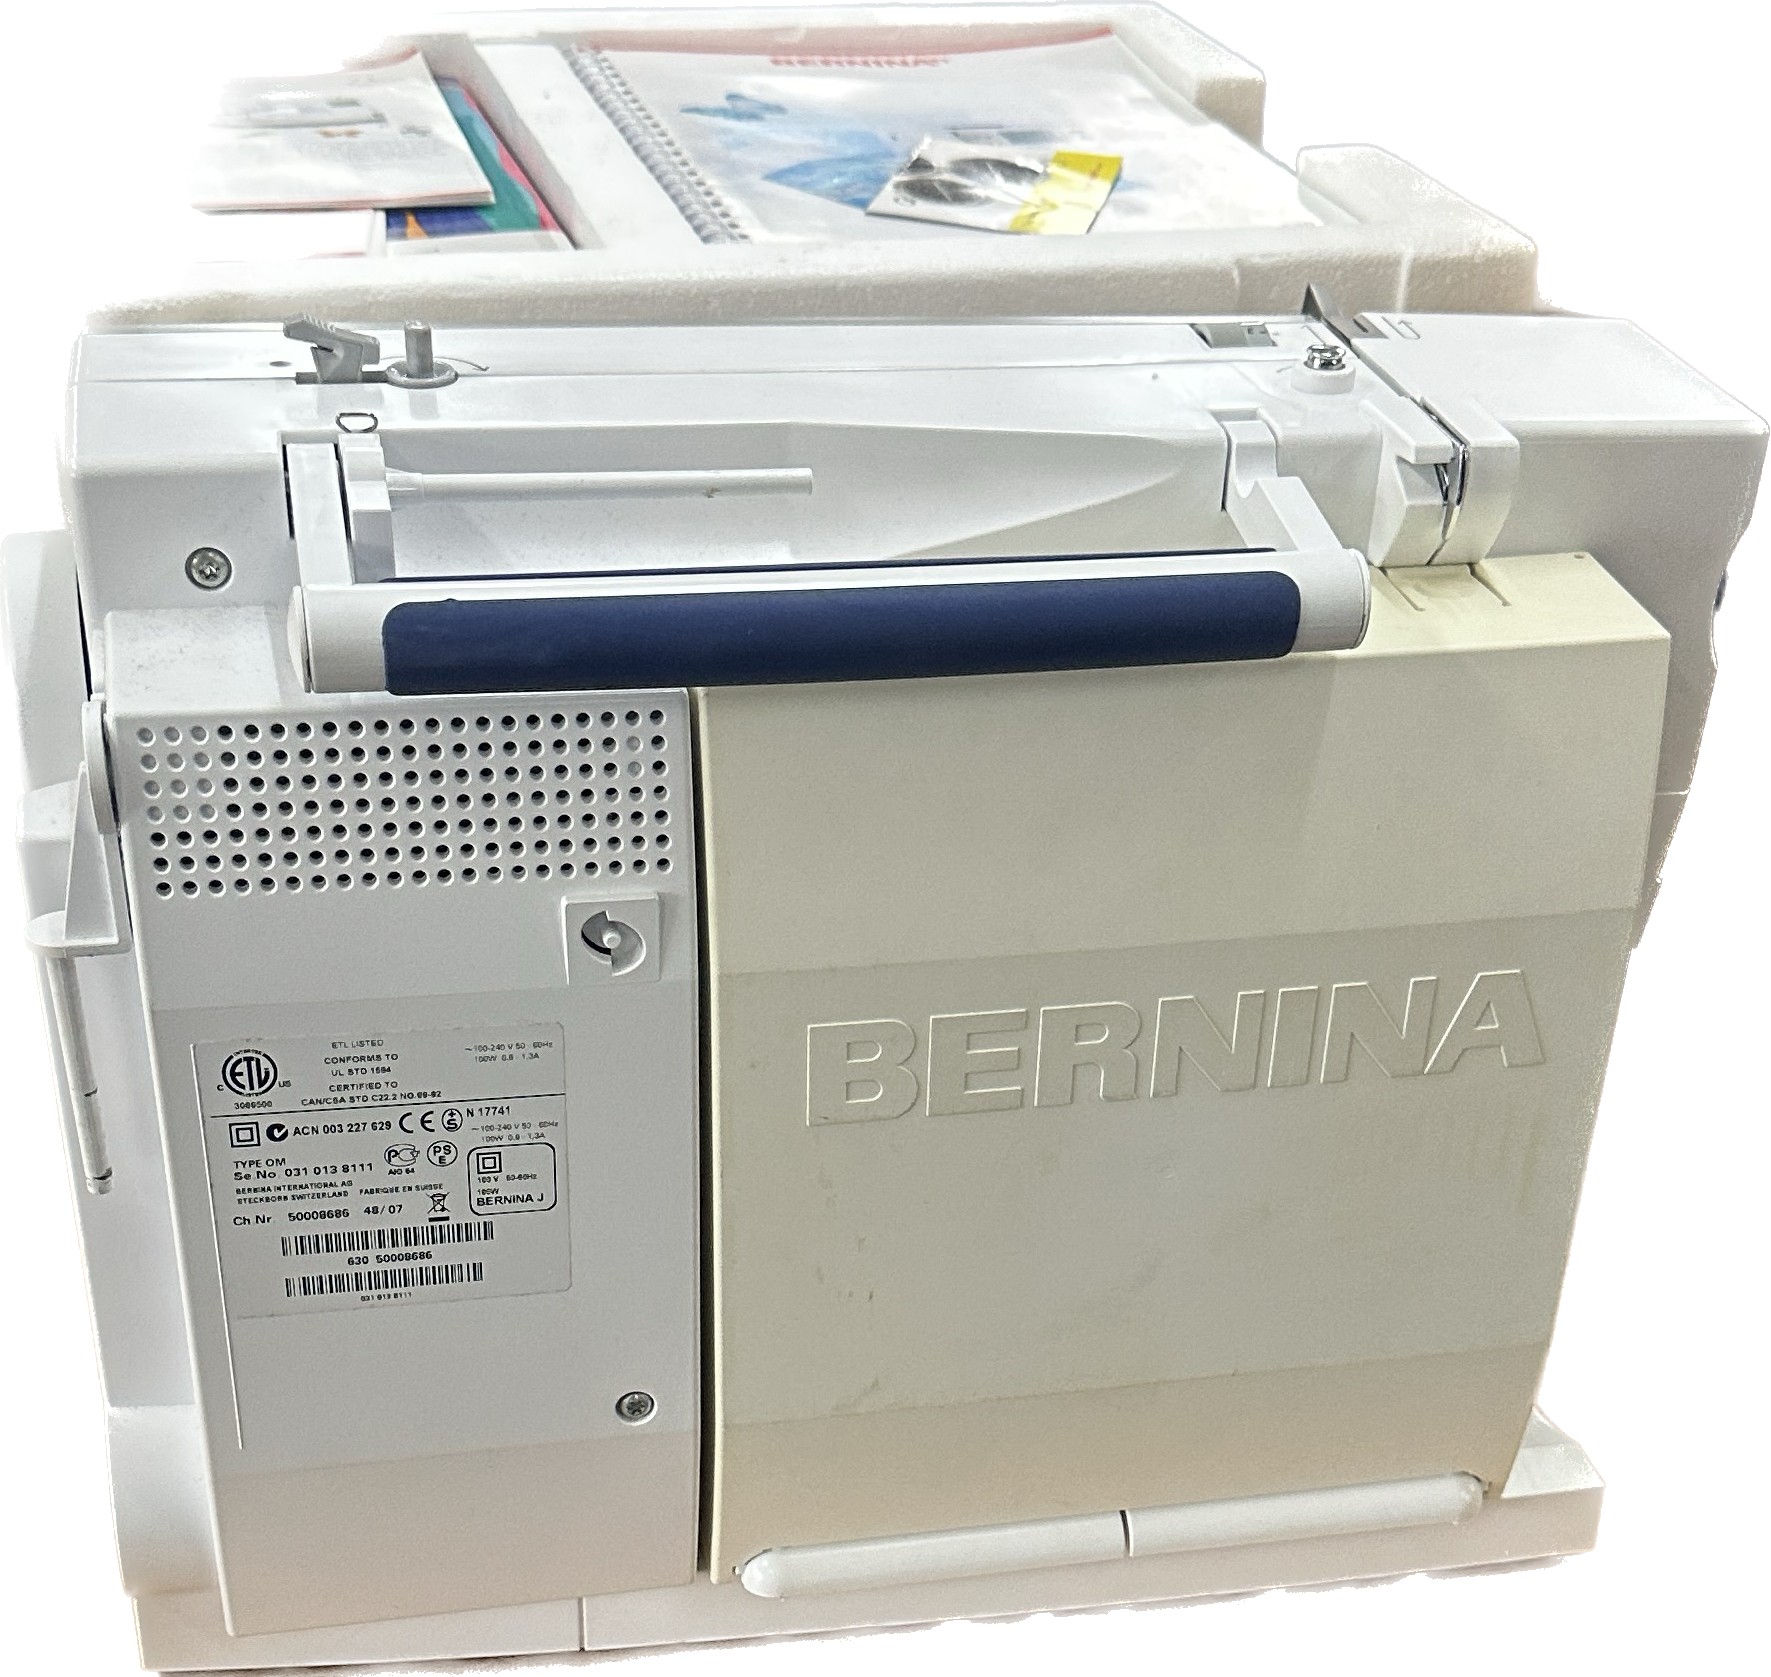 Bernina Artista 630 computerised sewing machine with Bernina embroidery unit, stitch regulator, - Image 5 of 11